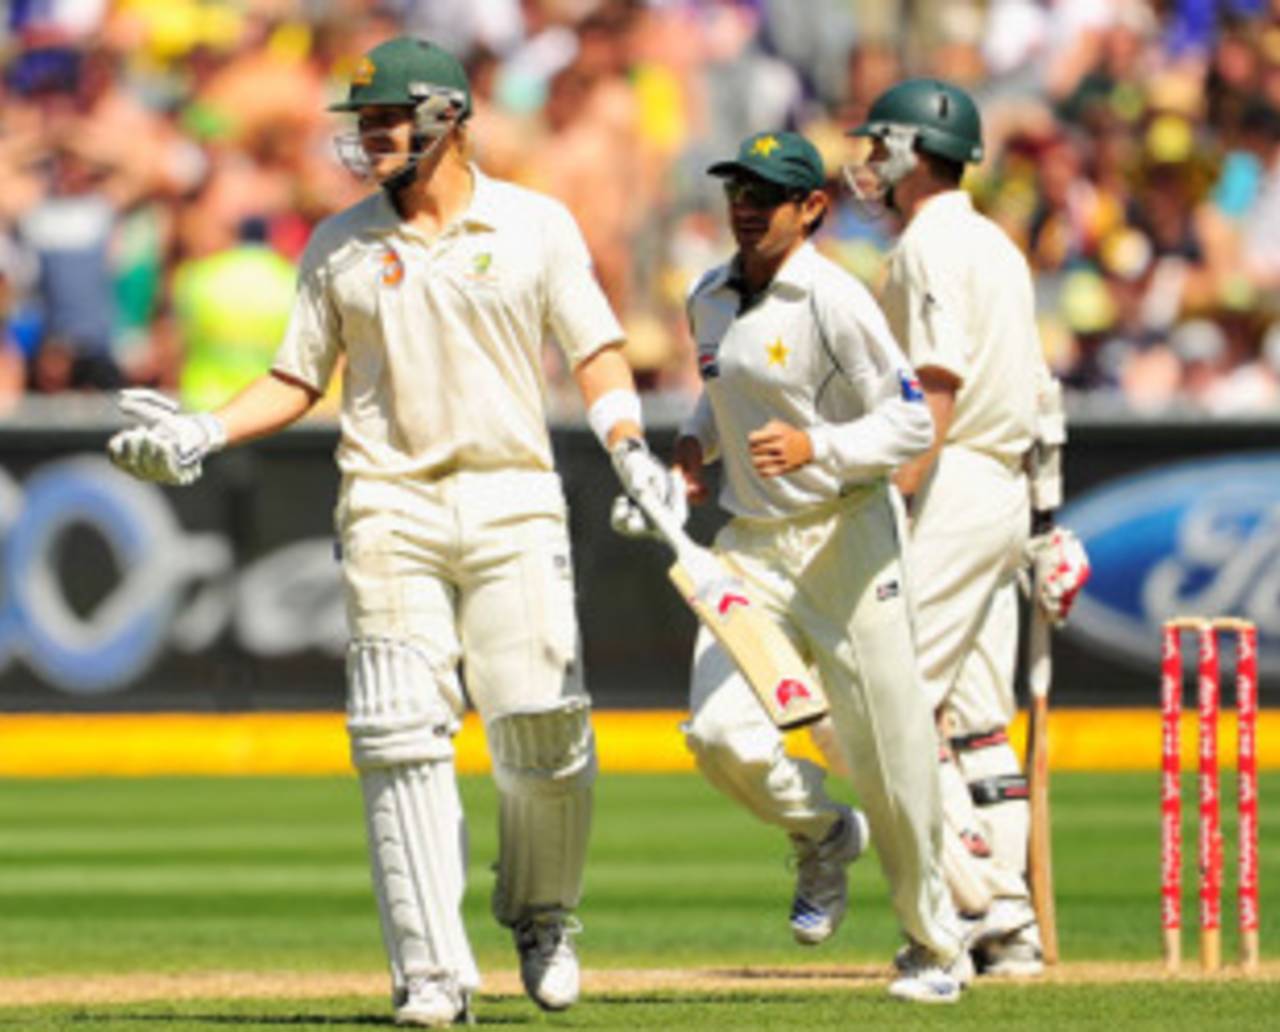 Shane Watson leaves in frustration after missing another century, Australia v Pakistan, 1st Test, Melbourne, December 26, 2009